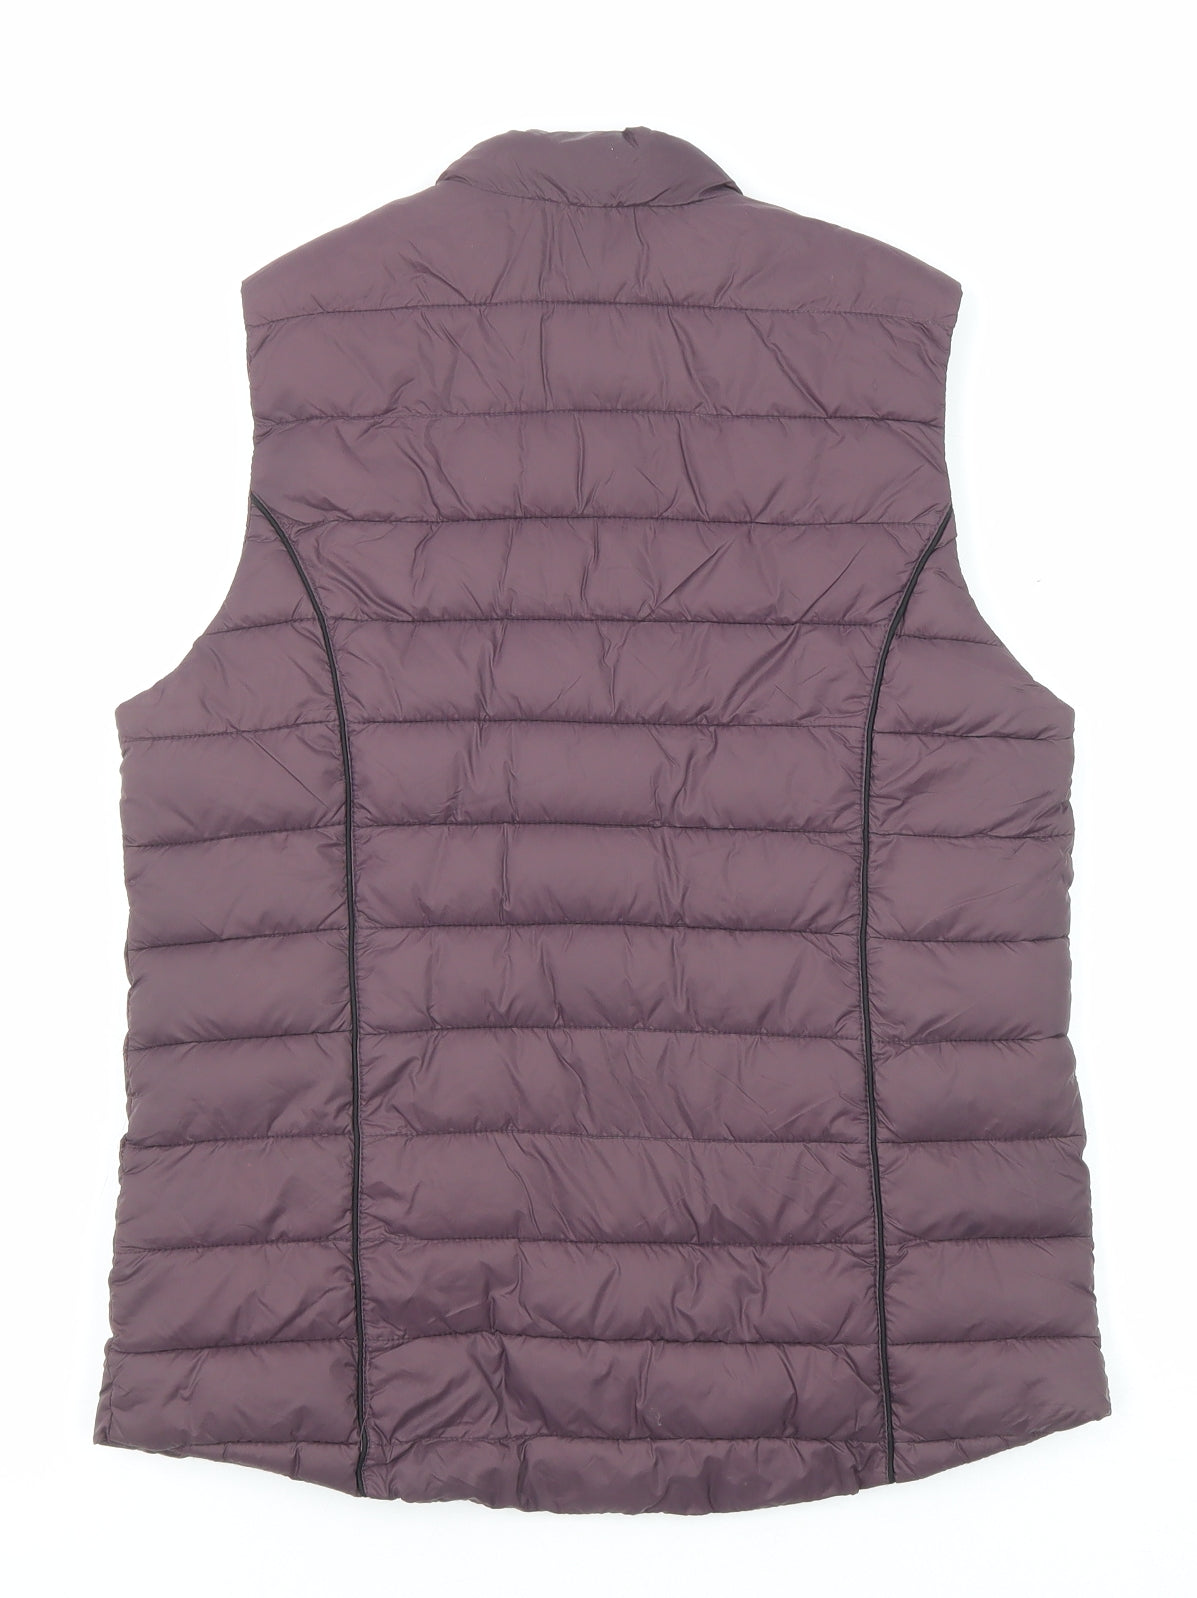 White Stuff Womens Purple Gilet Jacket Size 8 Zip